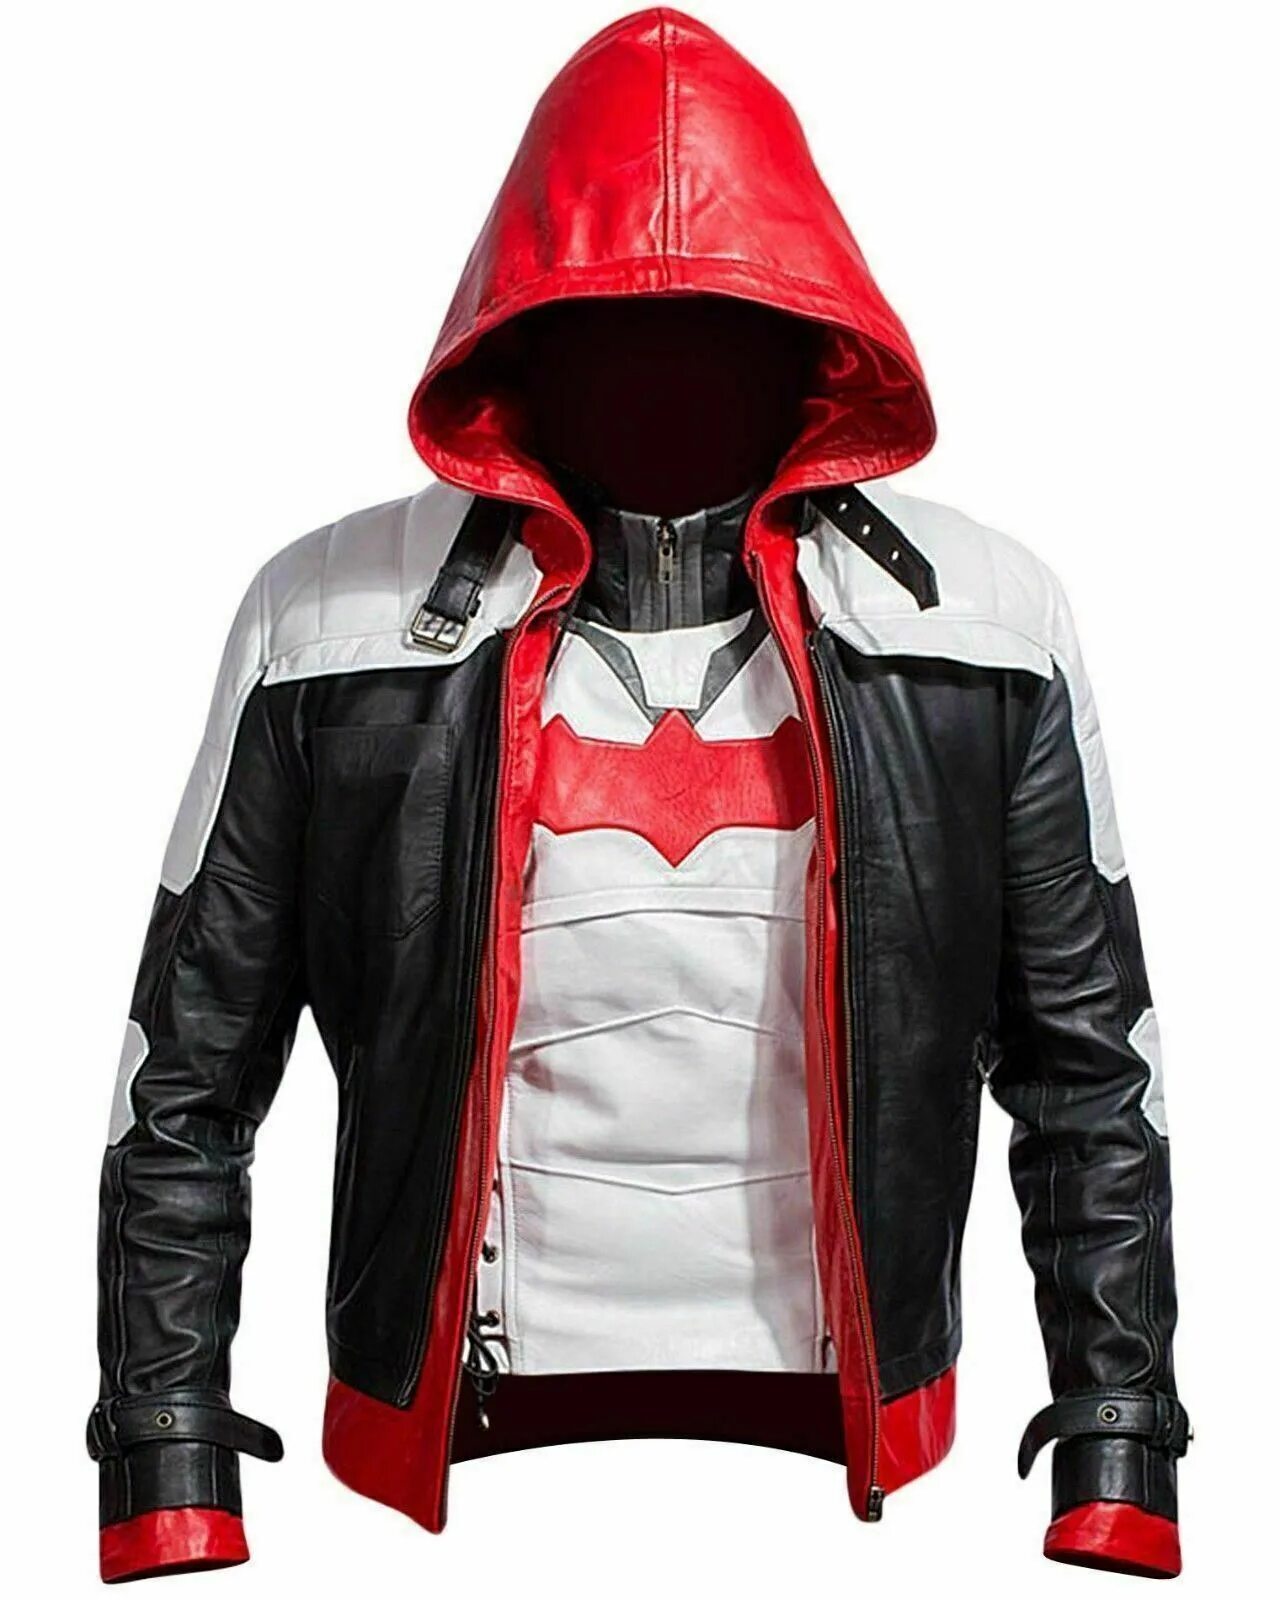 Куртка Бэтмен Аркхем. Куртка Бэтмен рыцарь Аркхема. Красный капюшон Batman Arkham Knight. Red Hood куртка. Куртки мужские капюшон черный